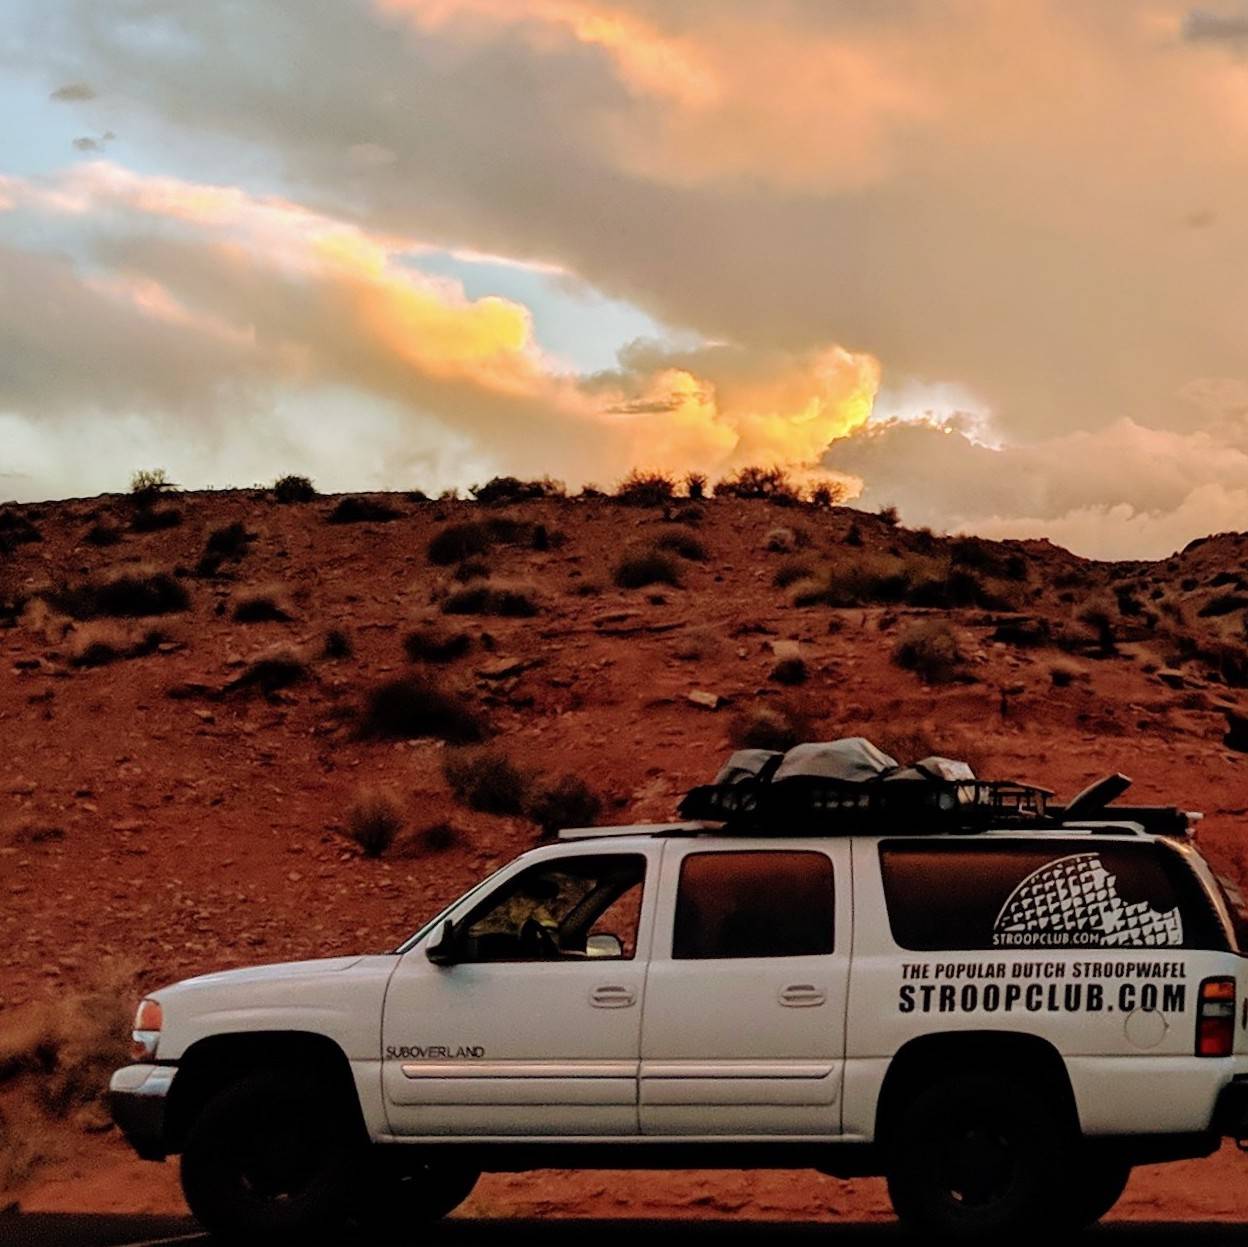 Stroop Club truck in desert